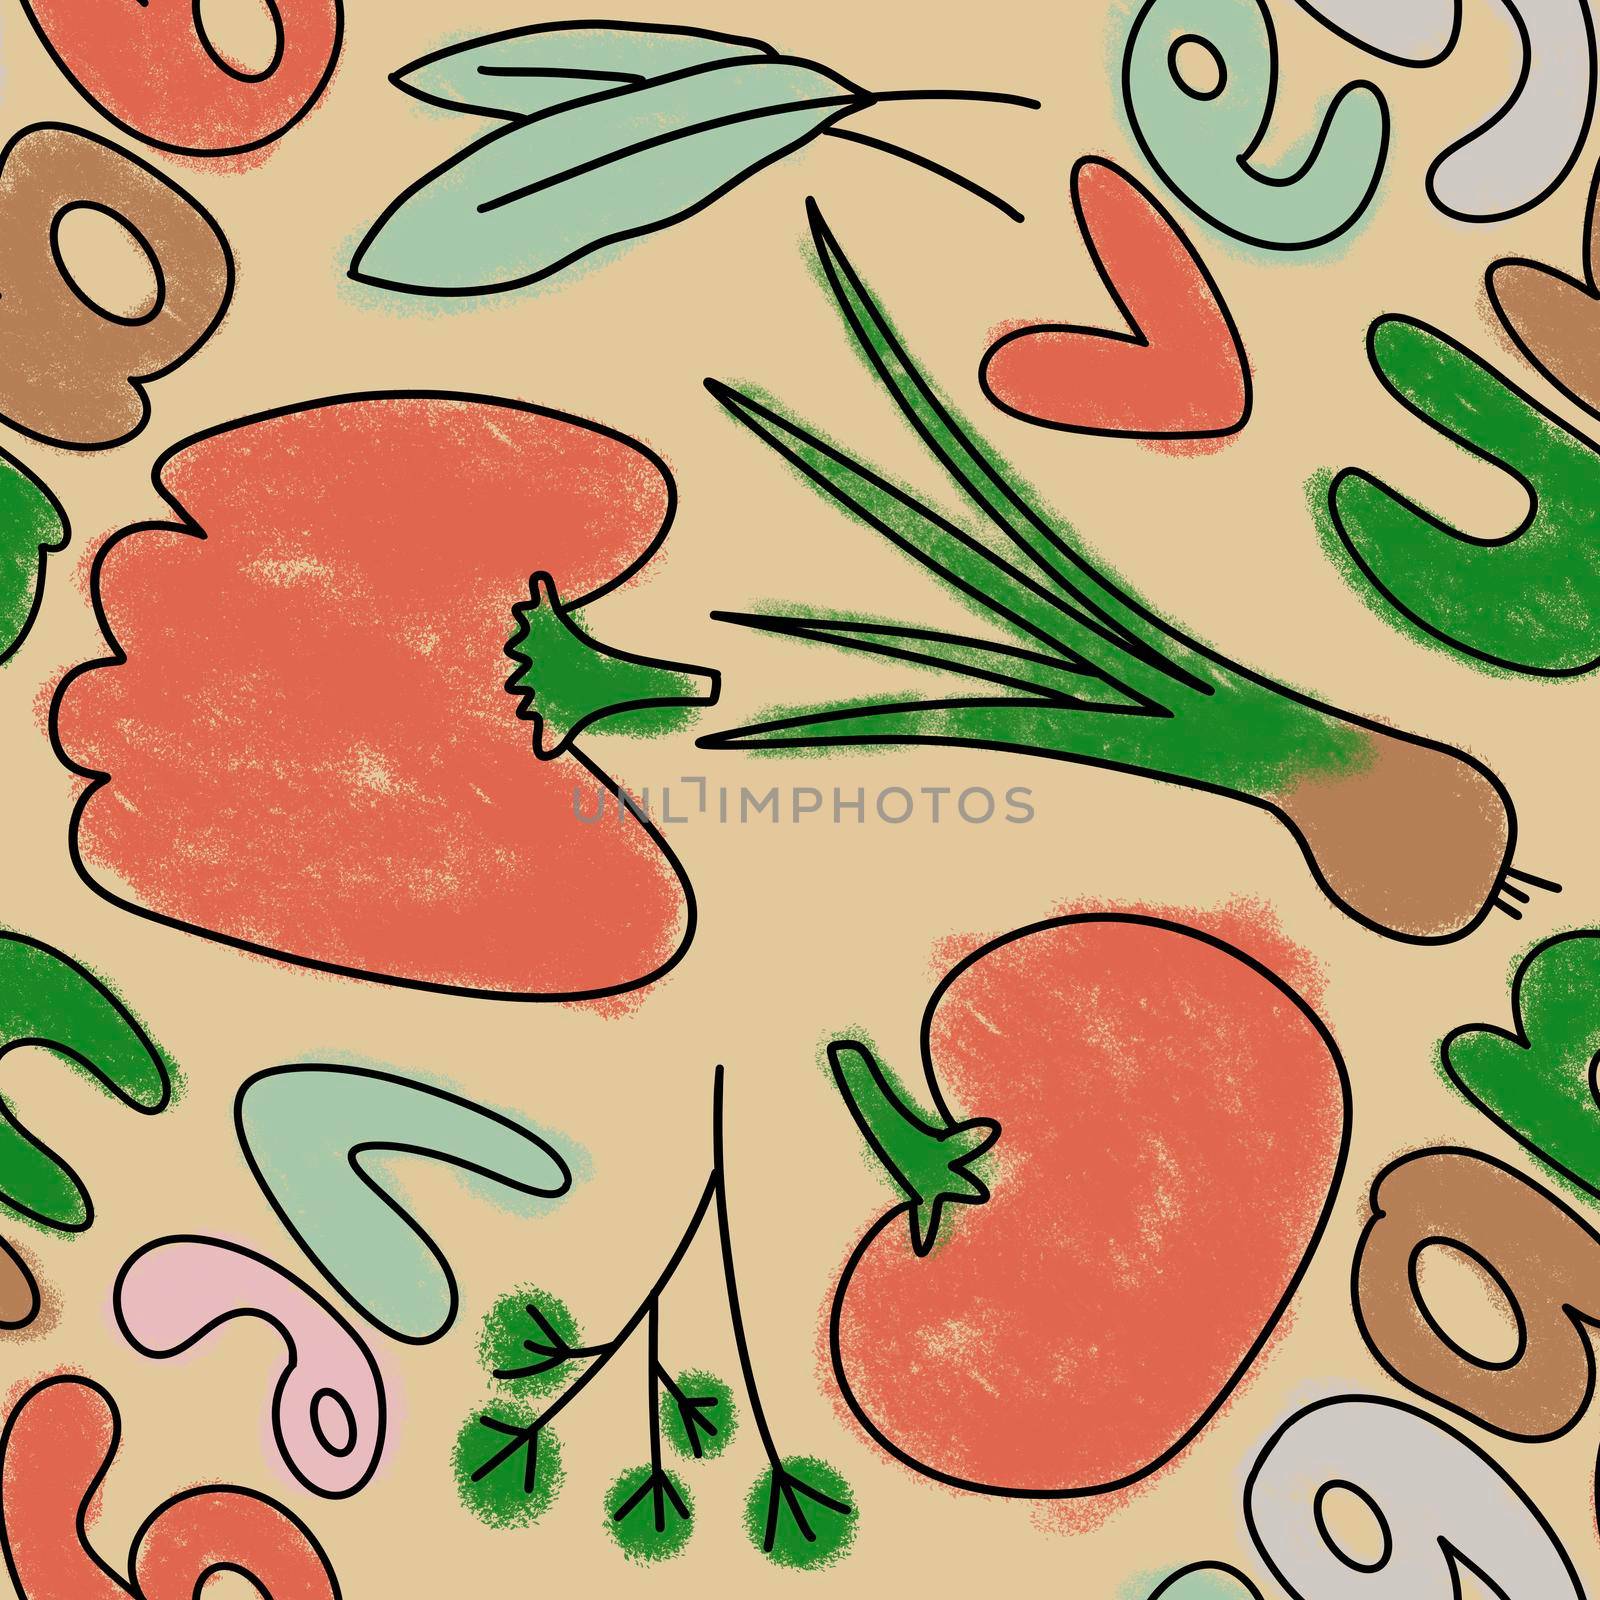 Hand drawn seamless pattern with vegetables veggies vegan vegetarian design. Tomato potato carrot cabbage leek onion bell papper fabric print. Retro vintage kitchen textile background, healthy food concept